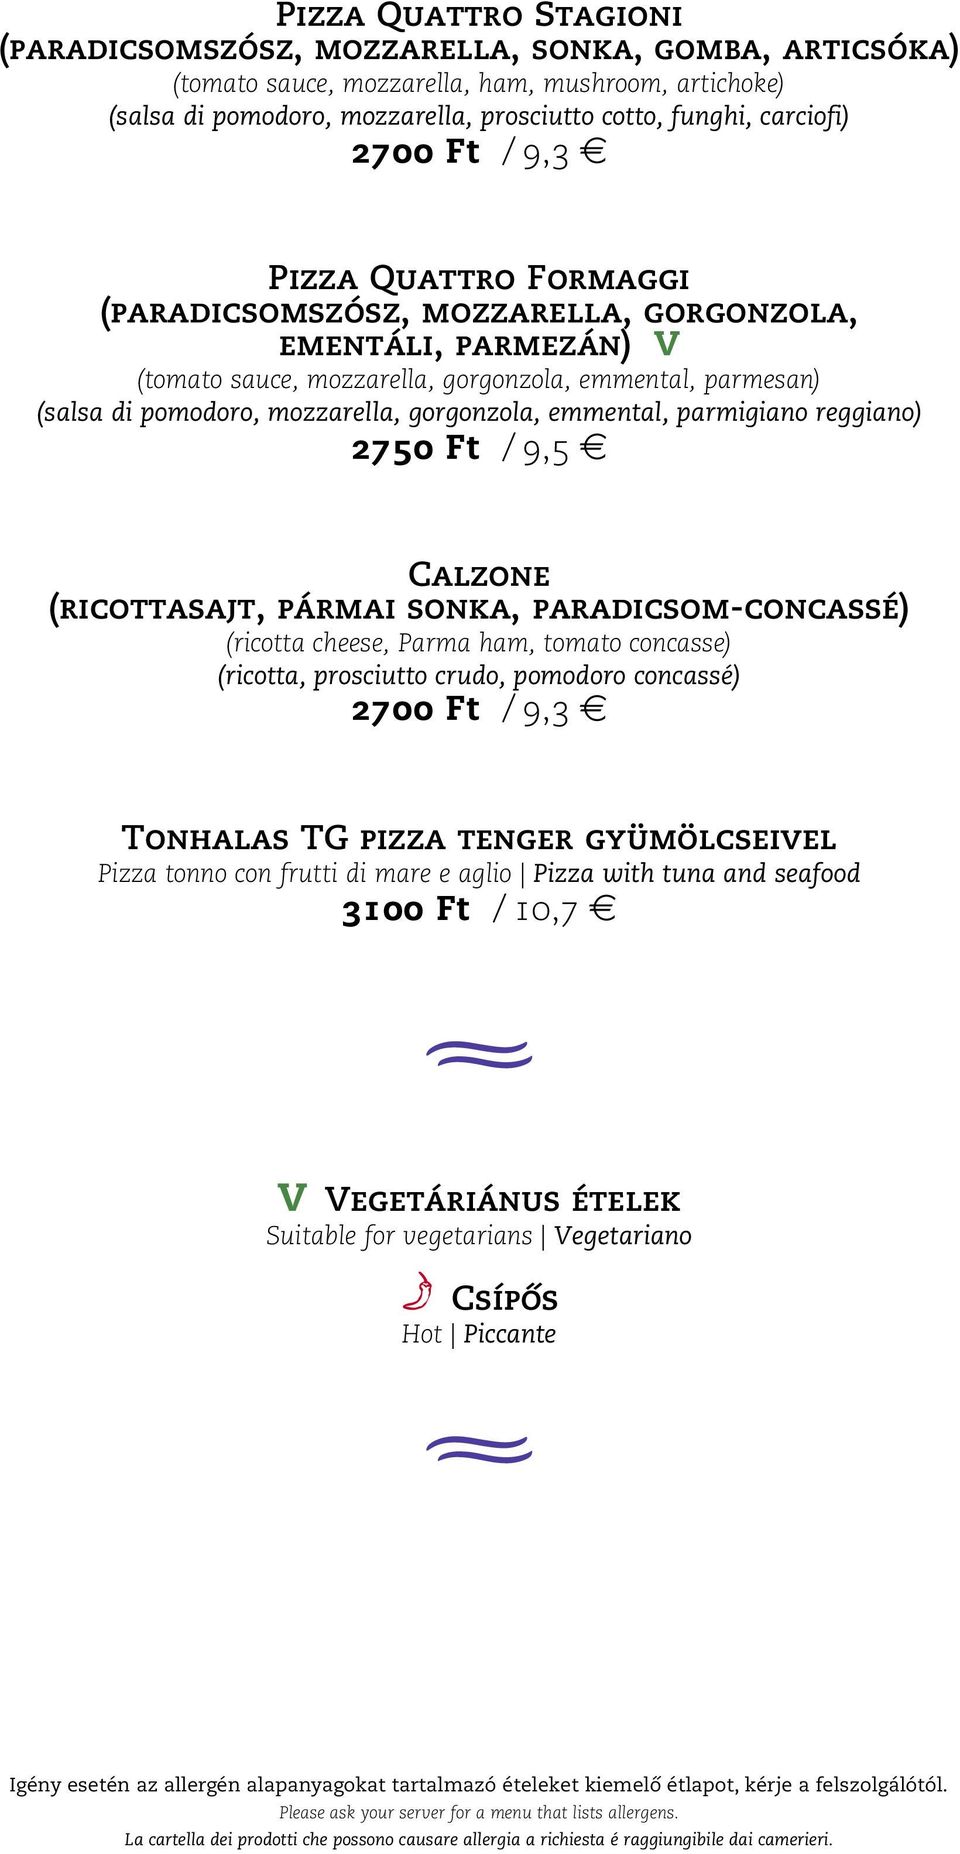 gorgonzola, emmental, parmigiano reggiano) 2750 Ft / 9,5 Calzone (ricottasajt, pármai sonka, paradicsom-concassé) (ricotta cheese, Parma ham, tomato concasse) (ricotta, prosciutto crudo, pomodoro